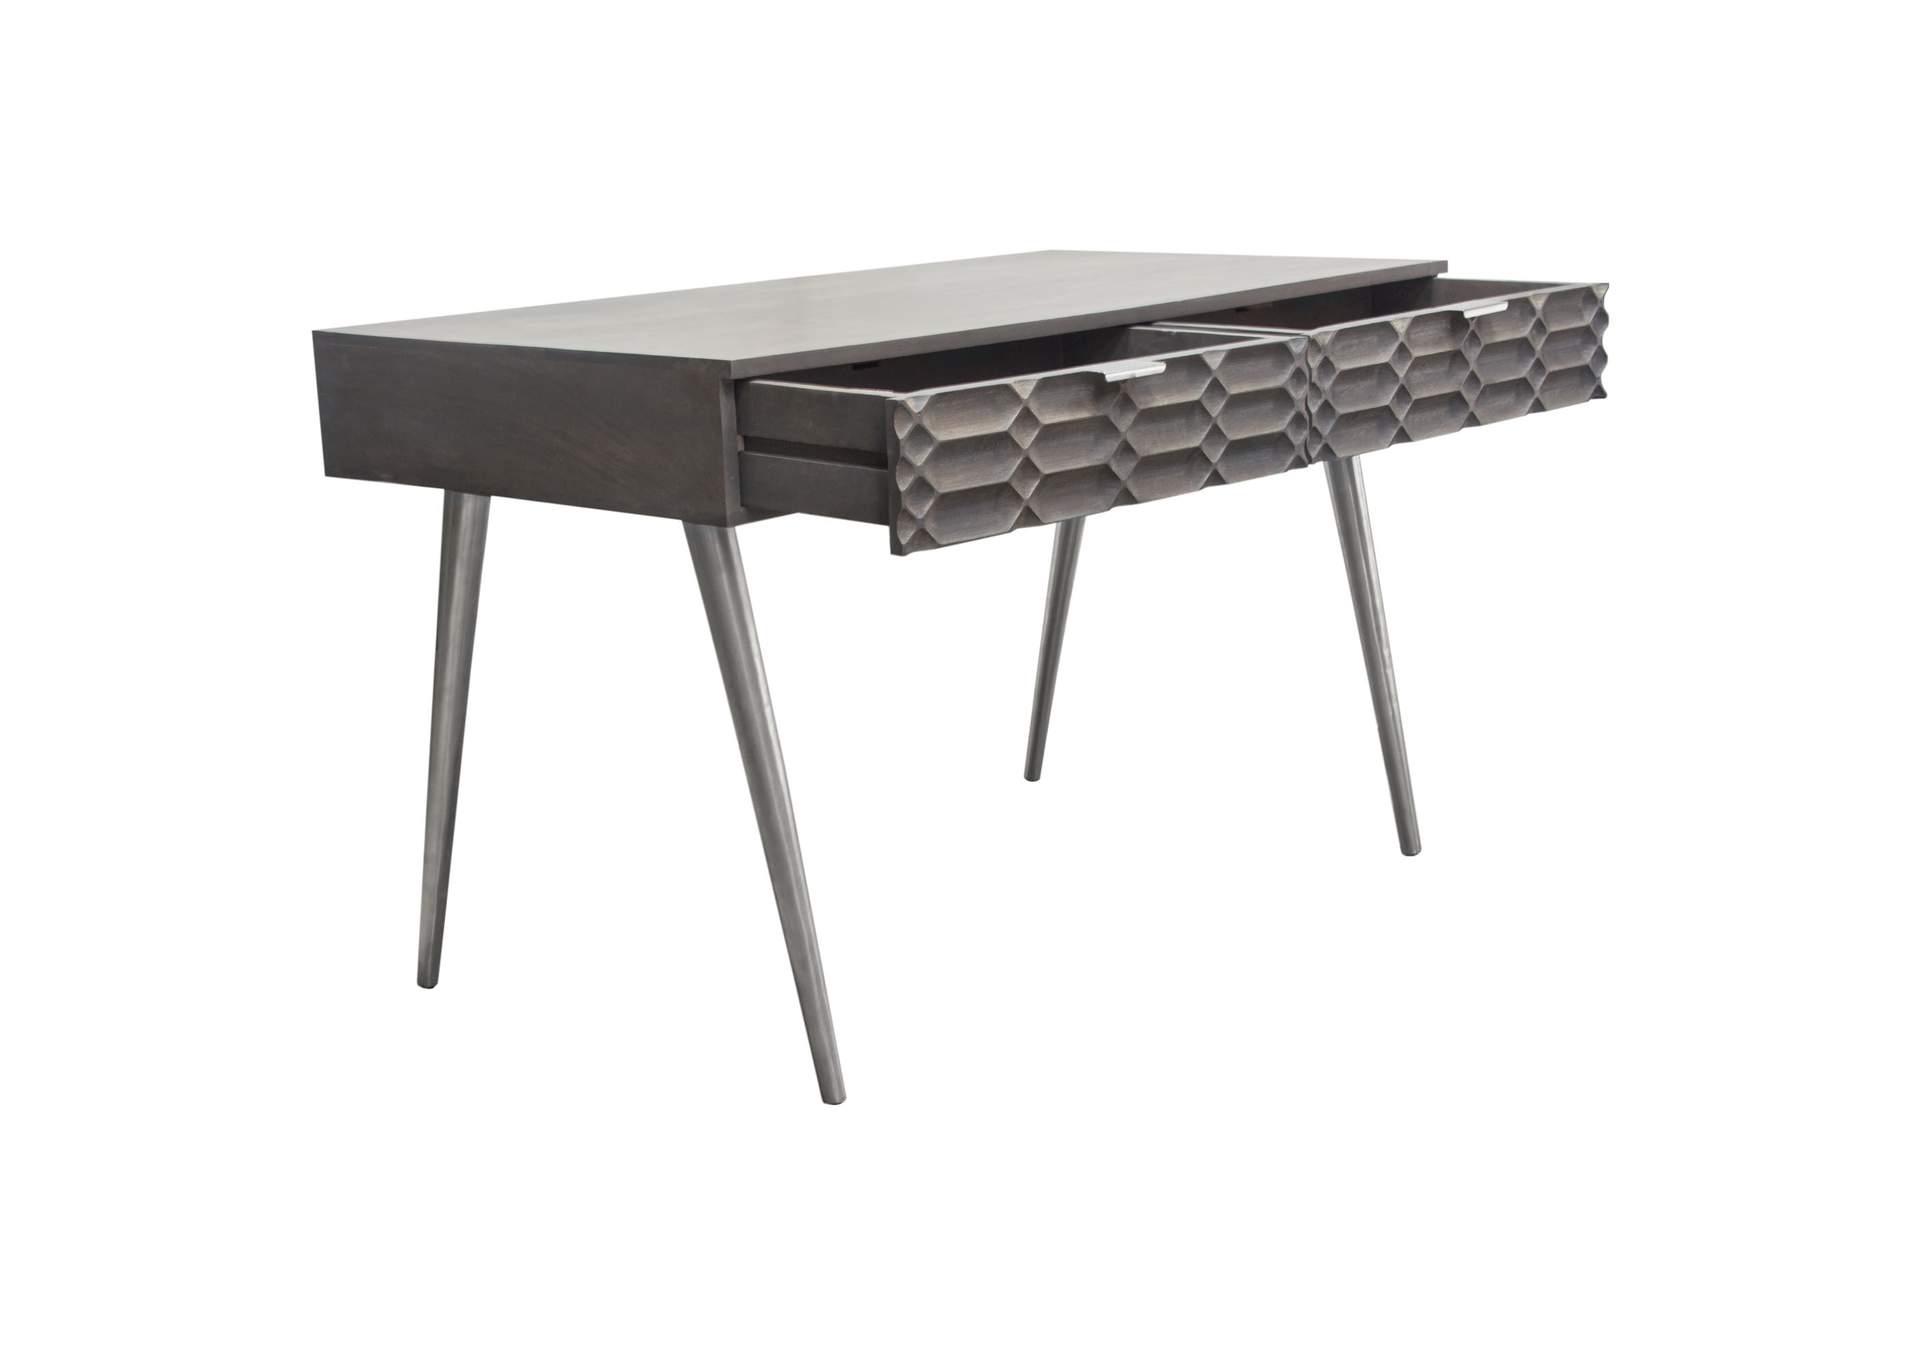 Petra Solid Mango Wood 2-Drawer Writing Desk in Smoke Grey Finish w/ Nickel Legs by Diamond Sofa,Diamond Sofa